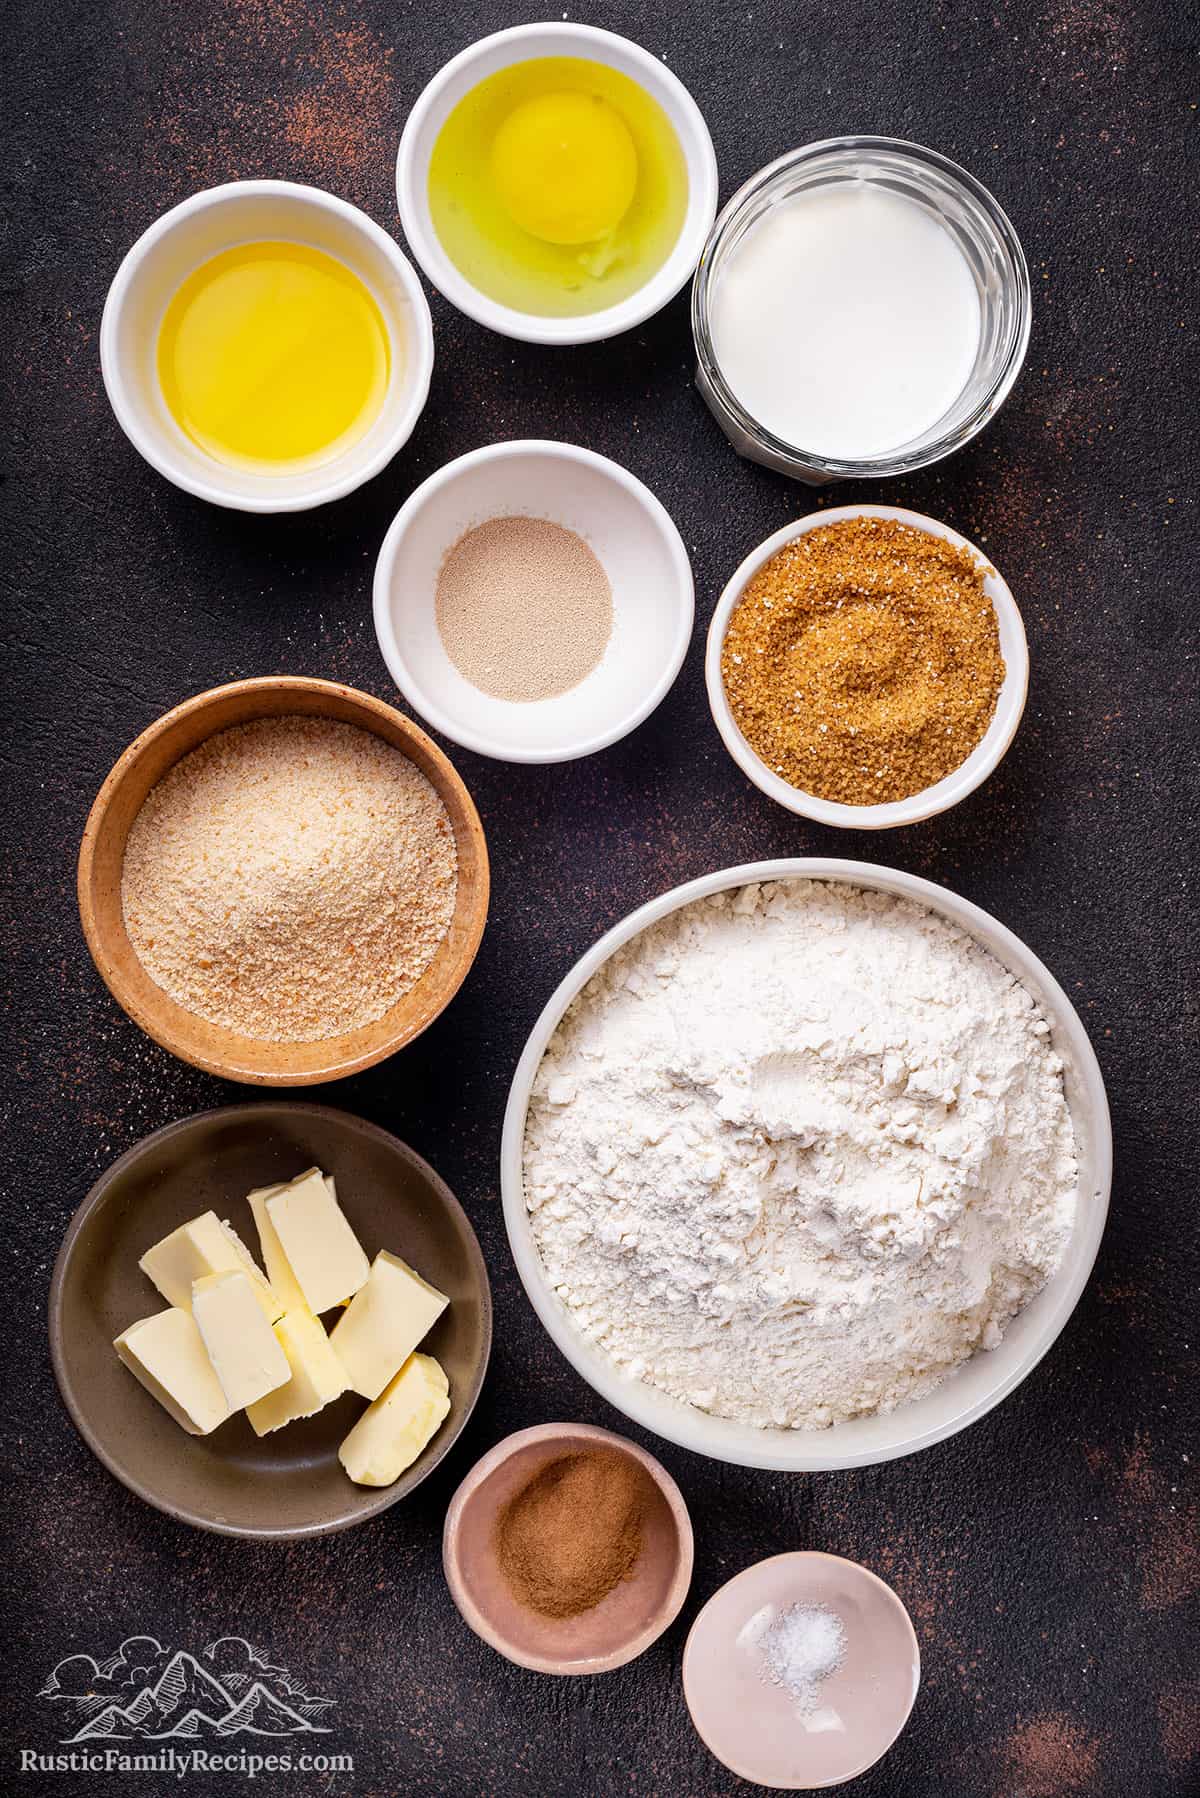 Ingredients for Senorita Bread in small white bowls